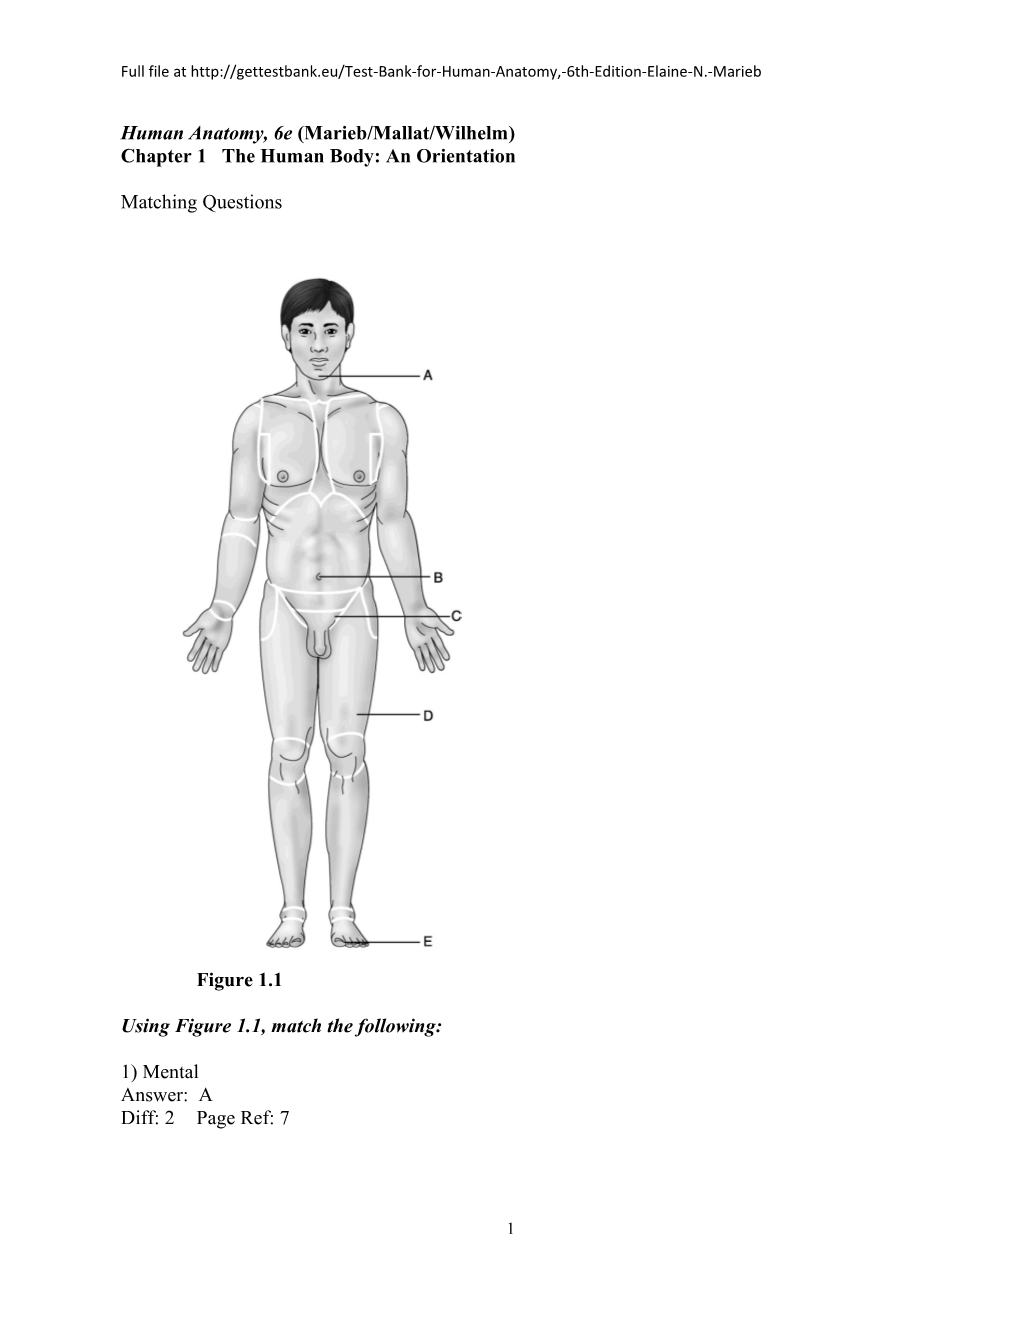 Human Anatomy, 6E (Marieb/Mallat/Wilhelm)